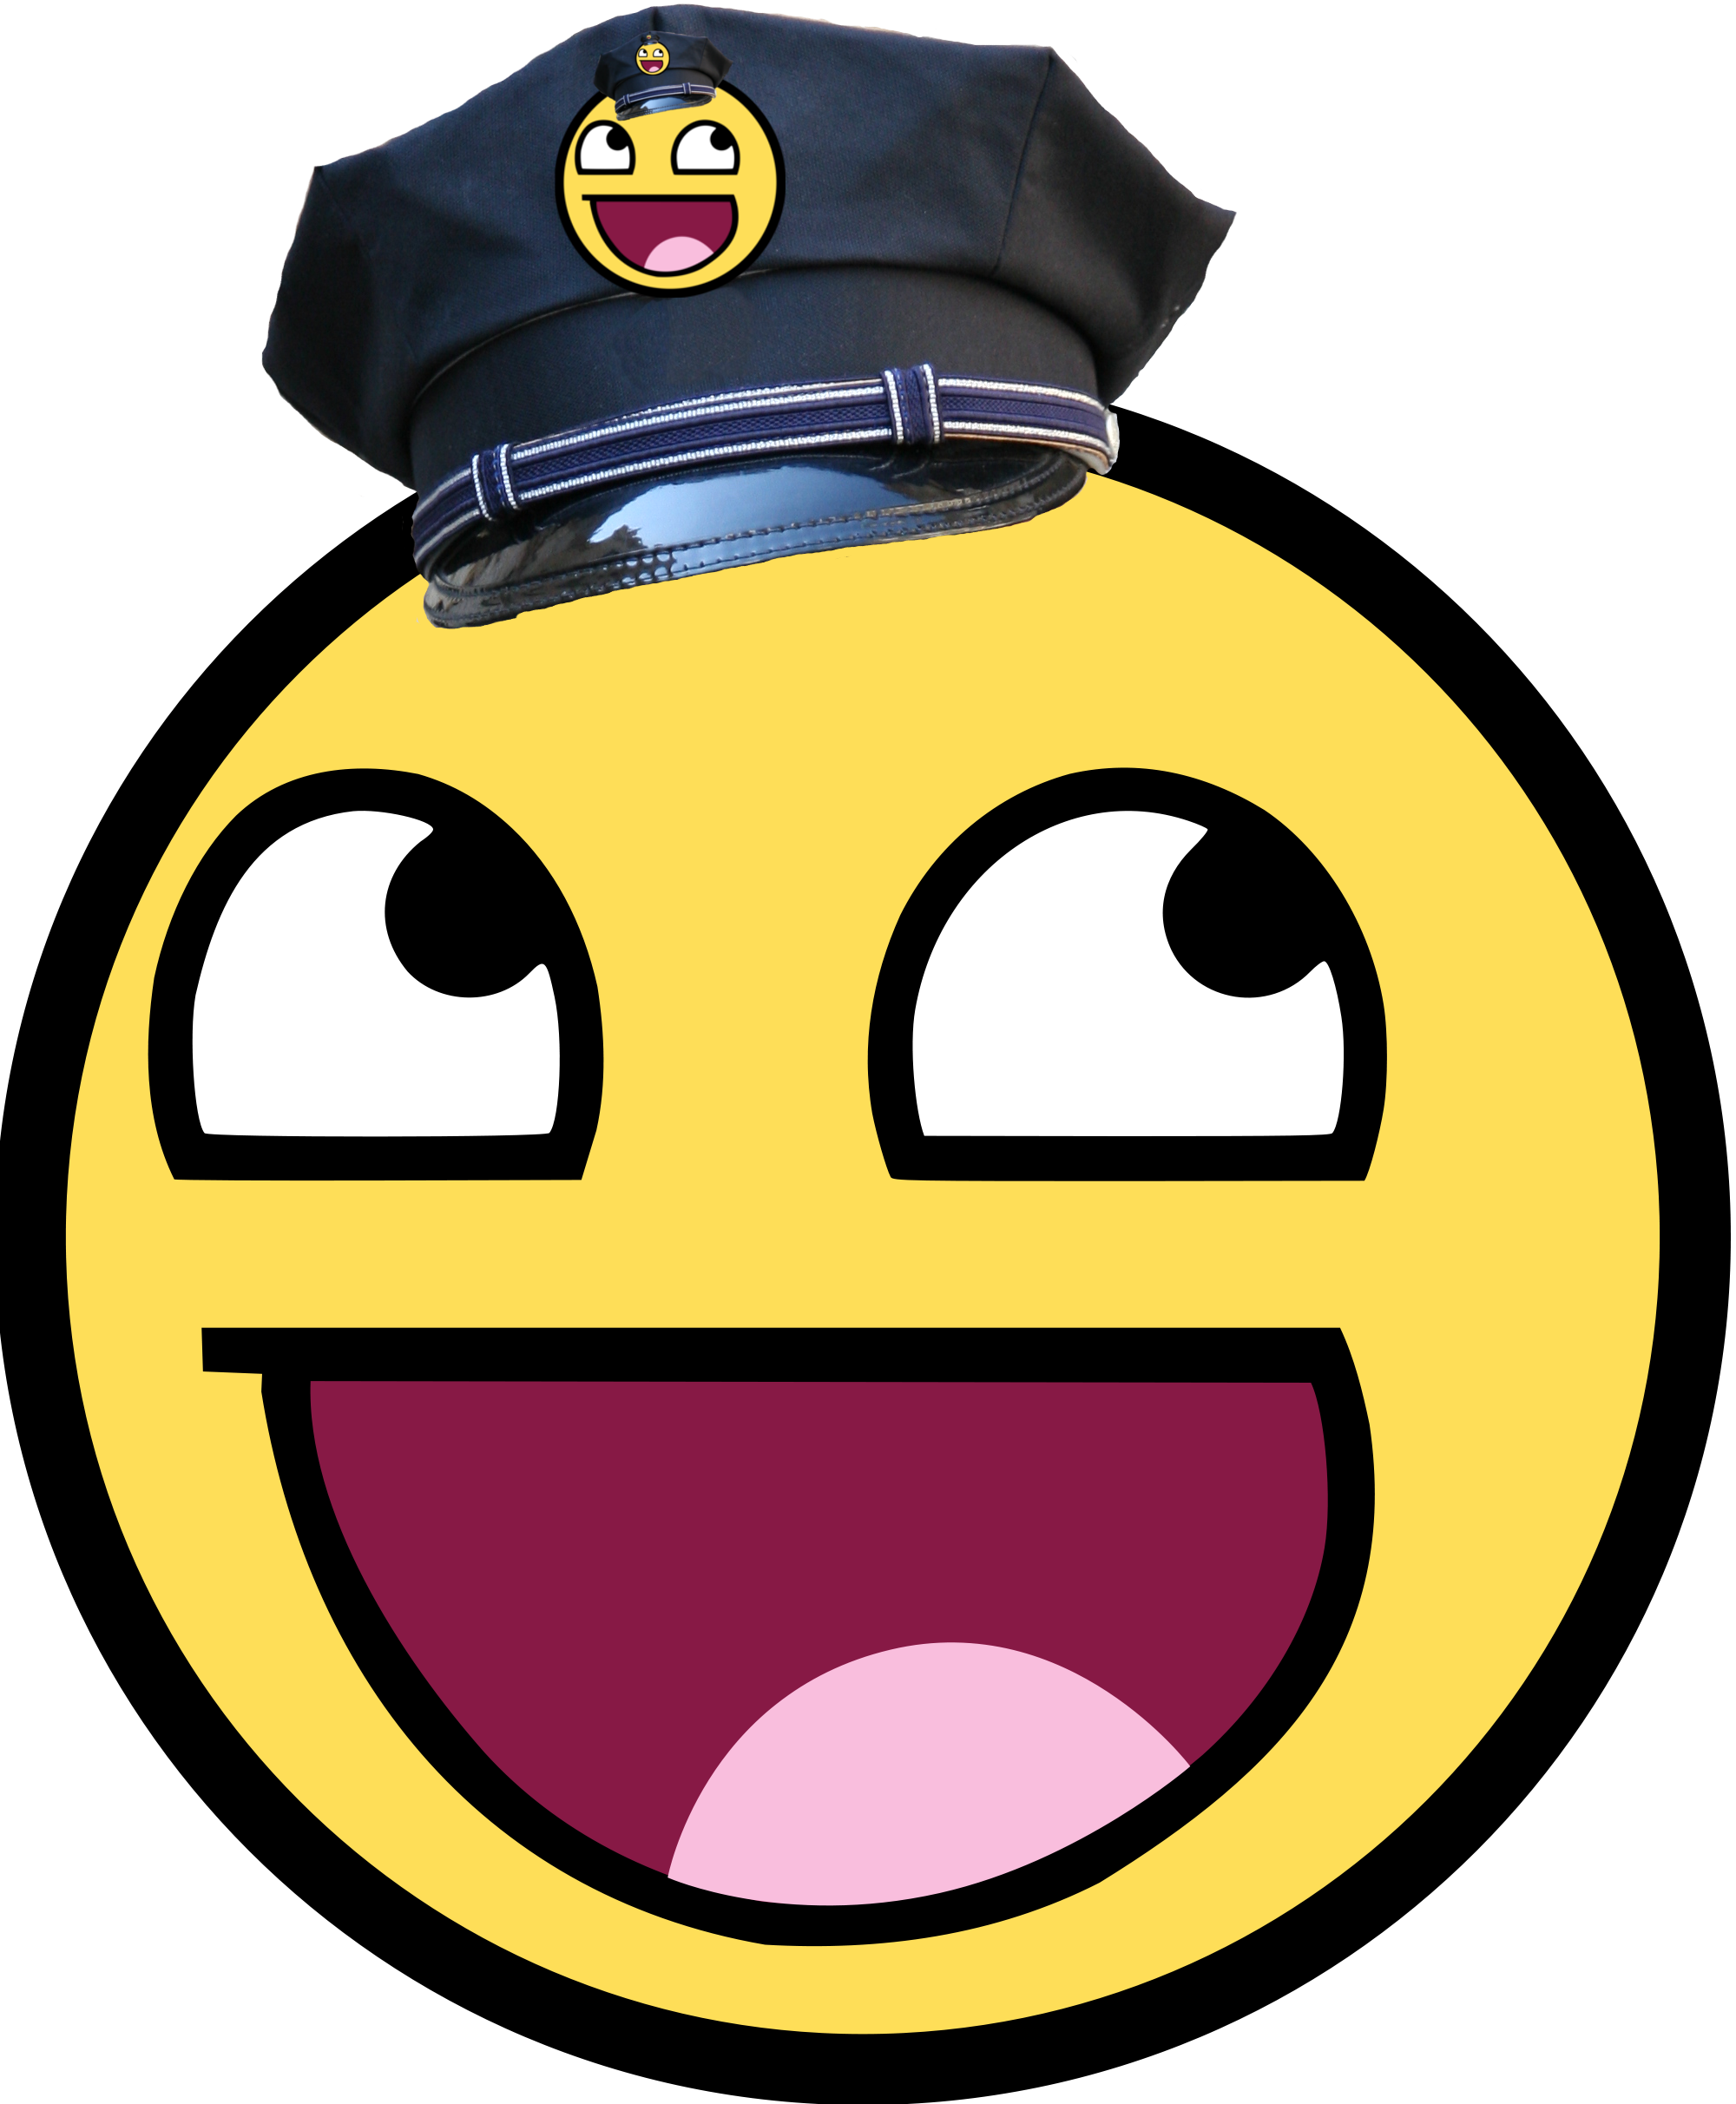 Filewikifun Police Smiley - Awesome Face (2000x2424)